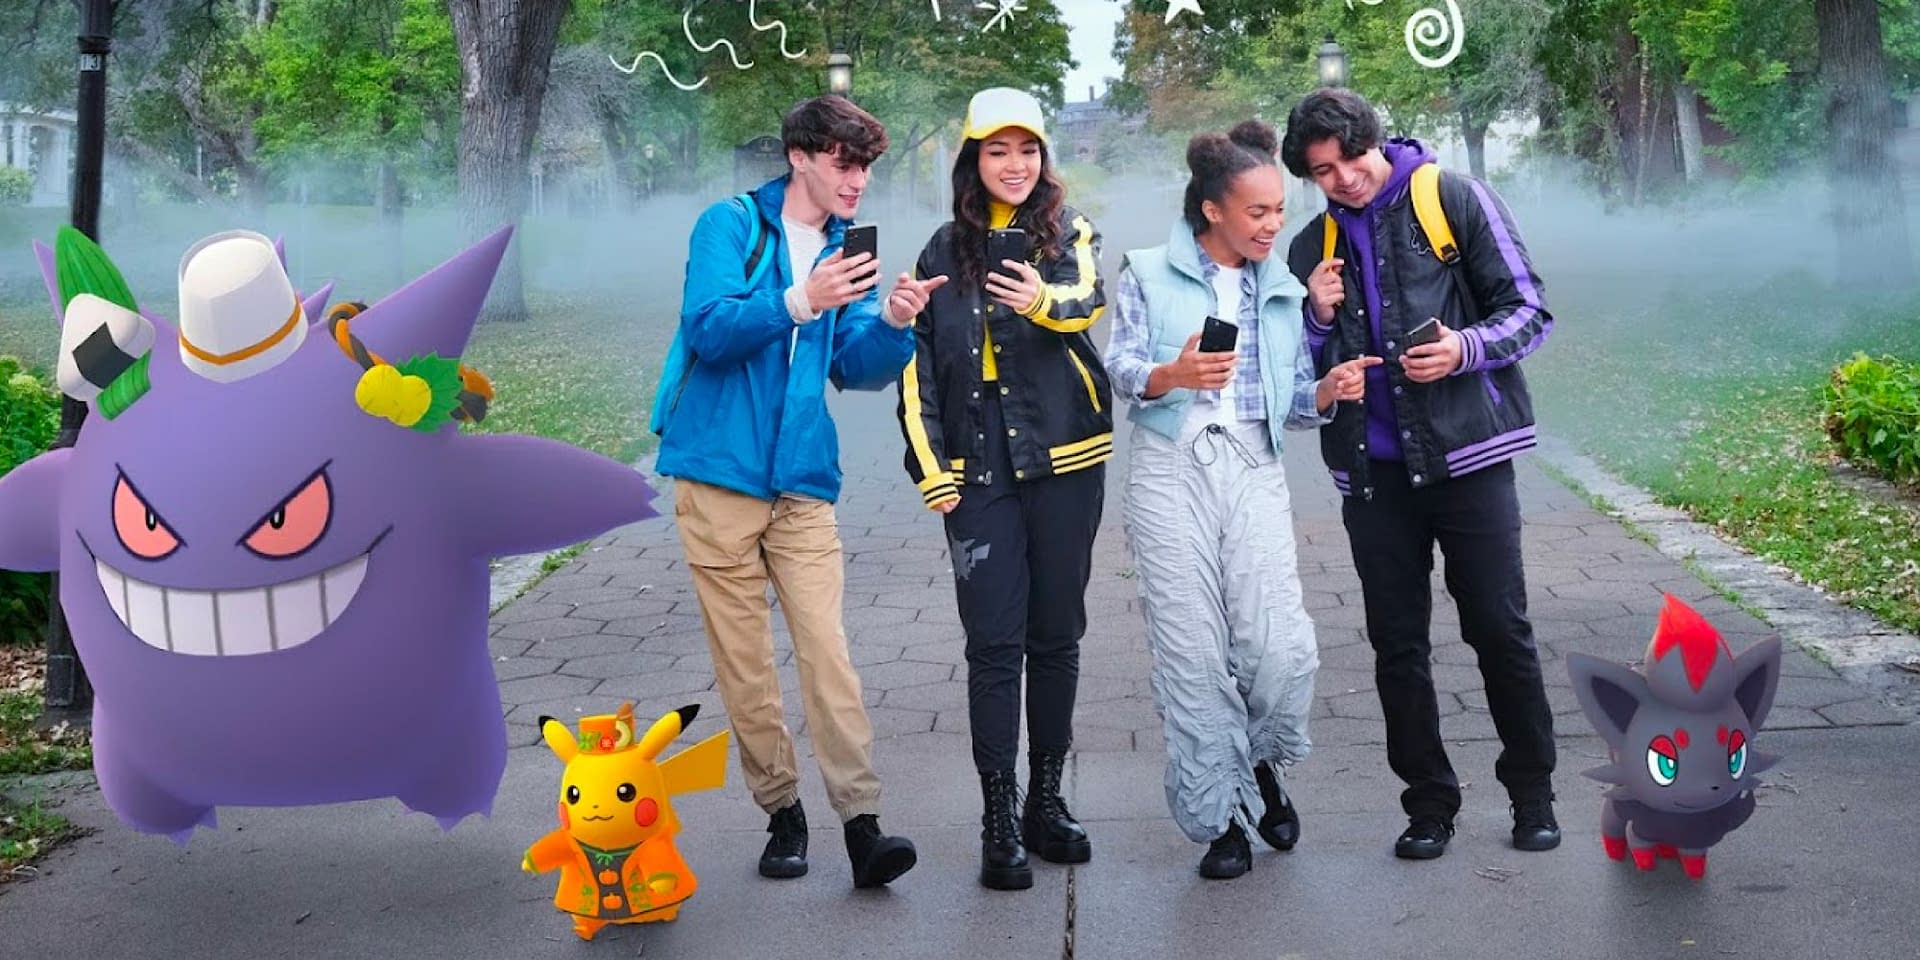 ✨Shiny Zorua CAUGHT! Shiny Costume Gengar, XXL Shiny Pumpkaboo and More In  Pokemon Go!✨ 